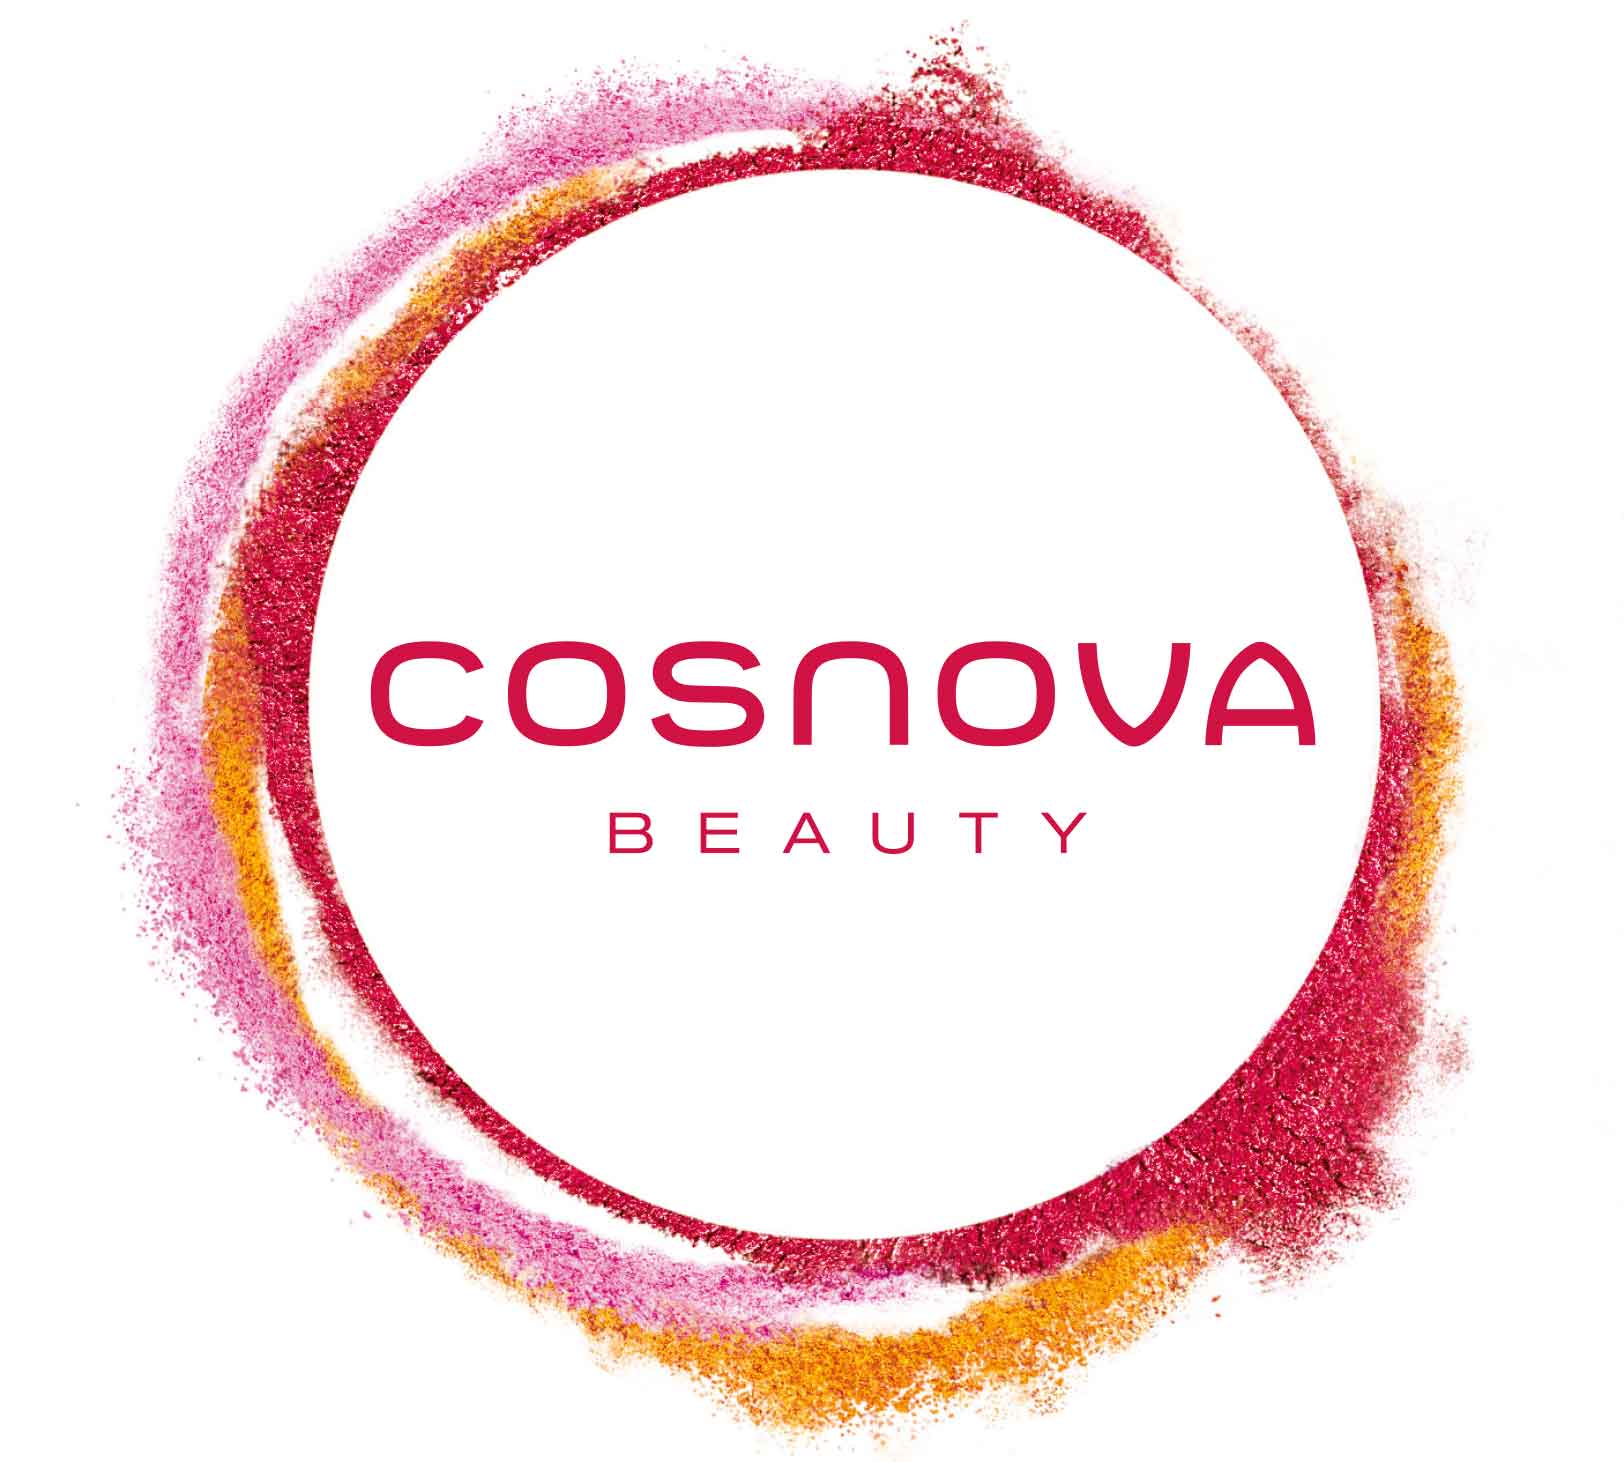 cosnova Beauty optimises retail data management